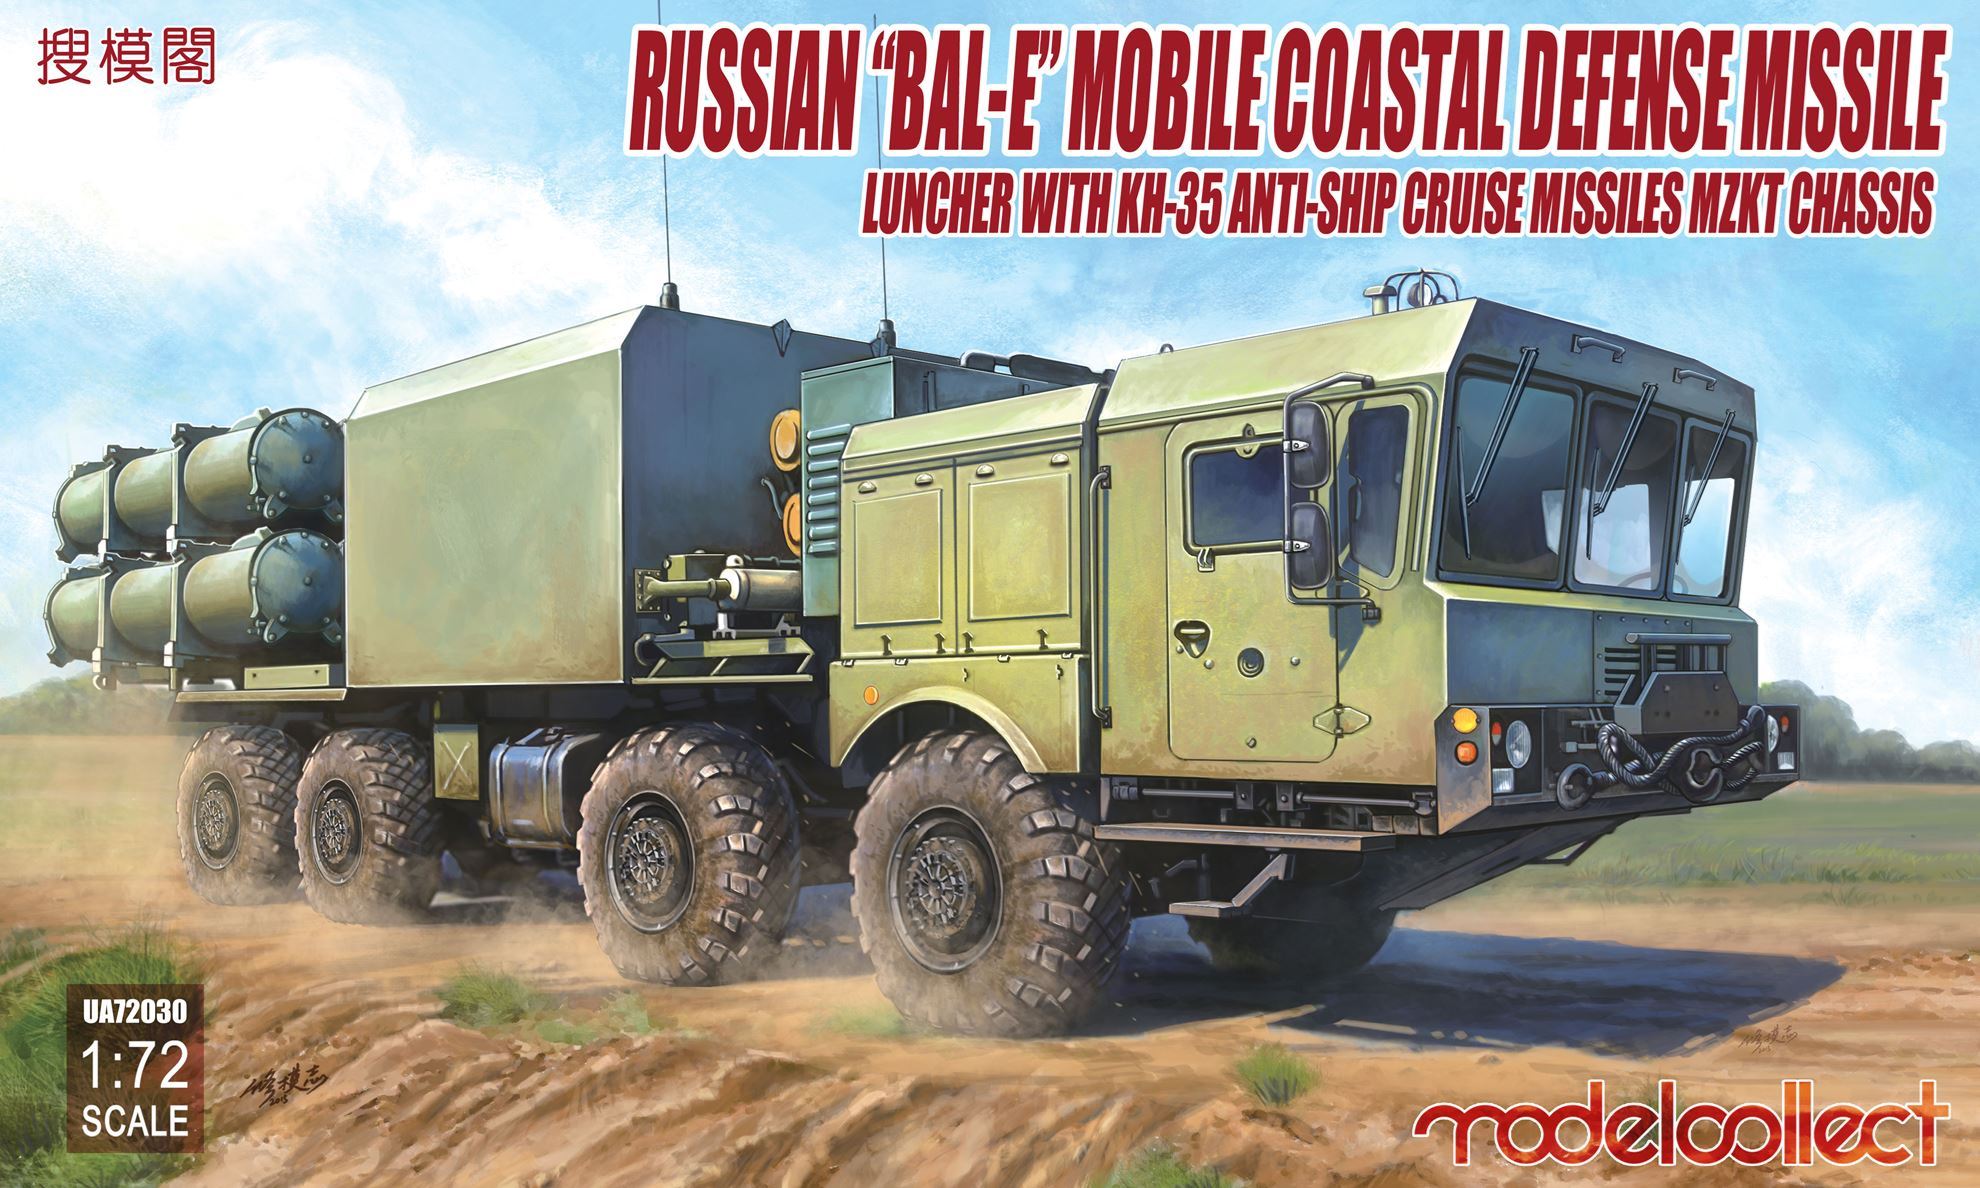 Russian "Bal-E" mobile coastal defense missile Launcher